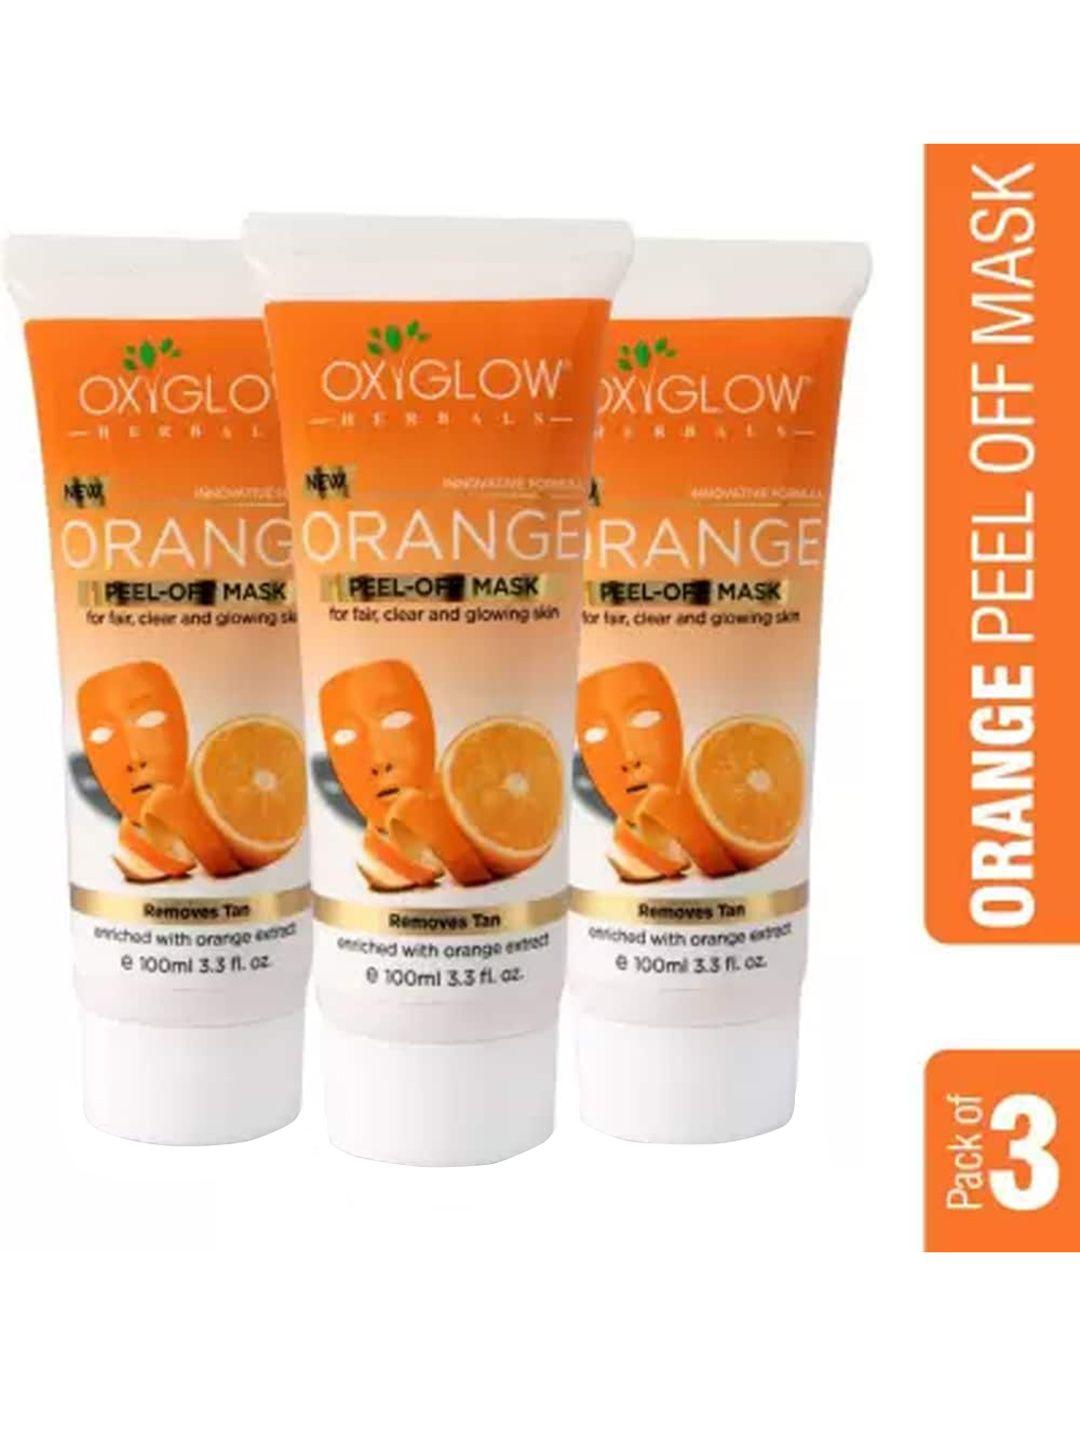 oxyglow set of 3 orange peel-off mask for clear & glowing skin - 100ml each